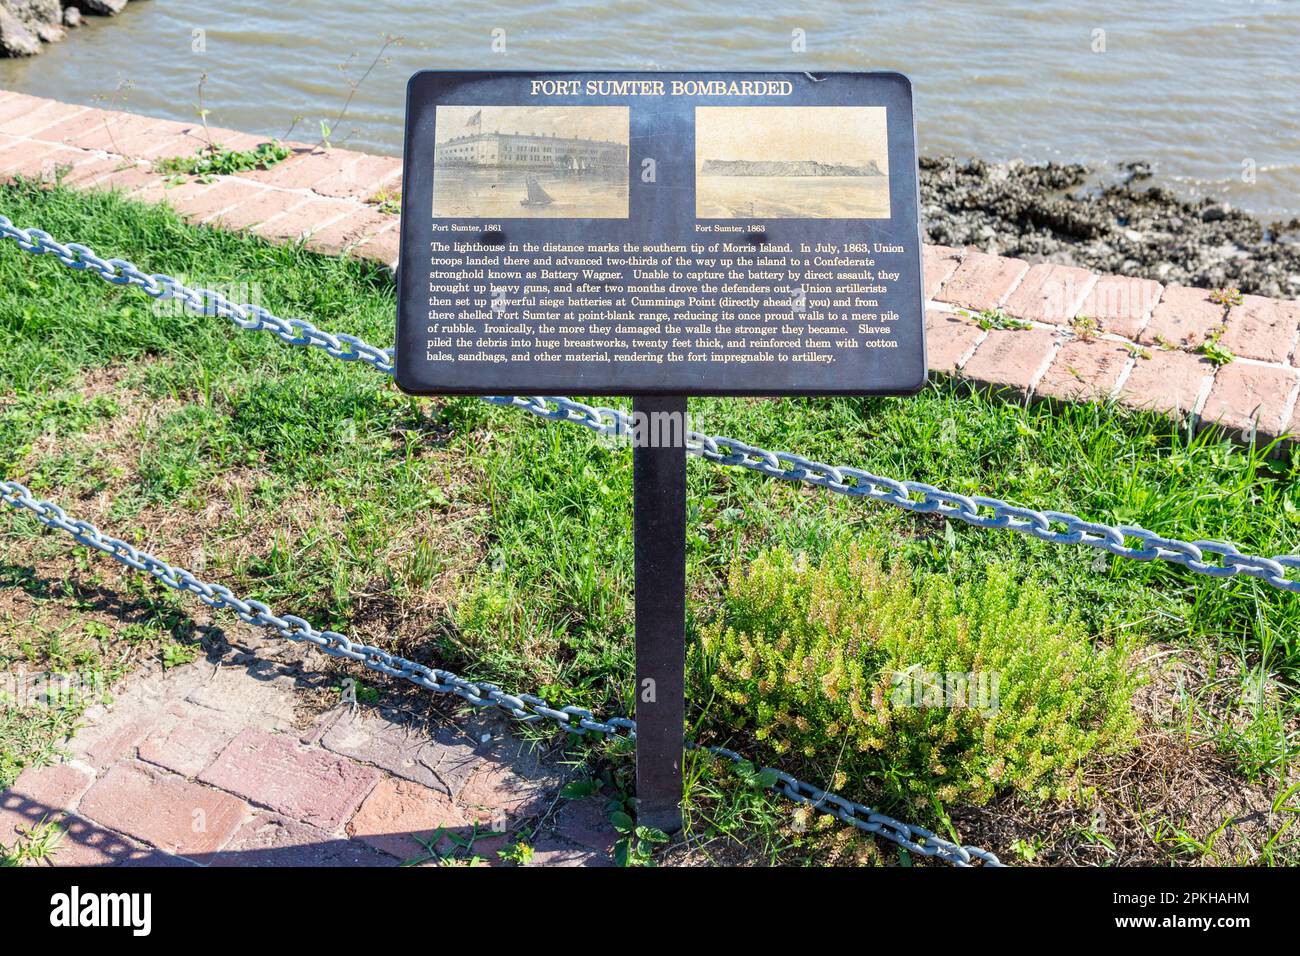 A sign describing the civil War bombardment at Fort Sumter National Monument in Charleston Harbor, South Carolina, USA. Stock Photo